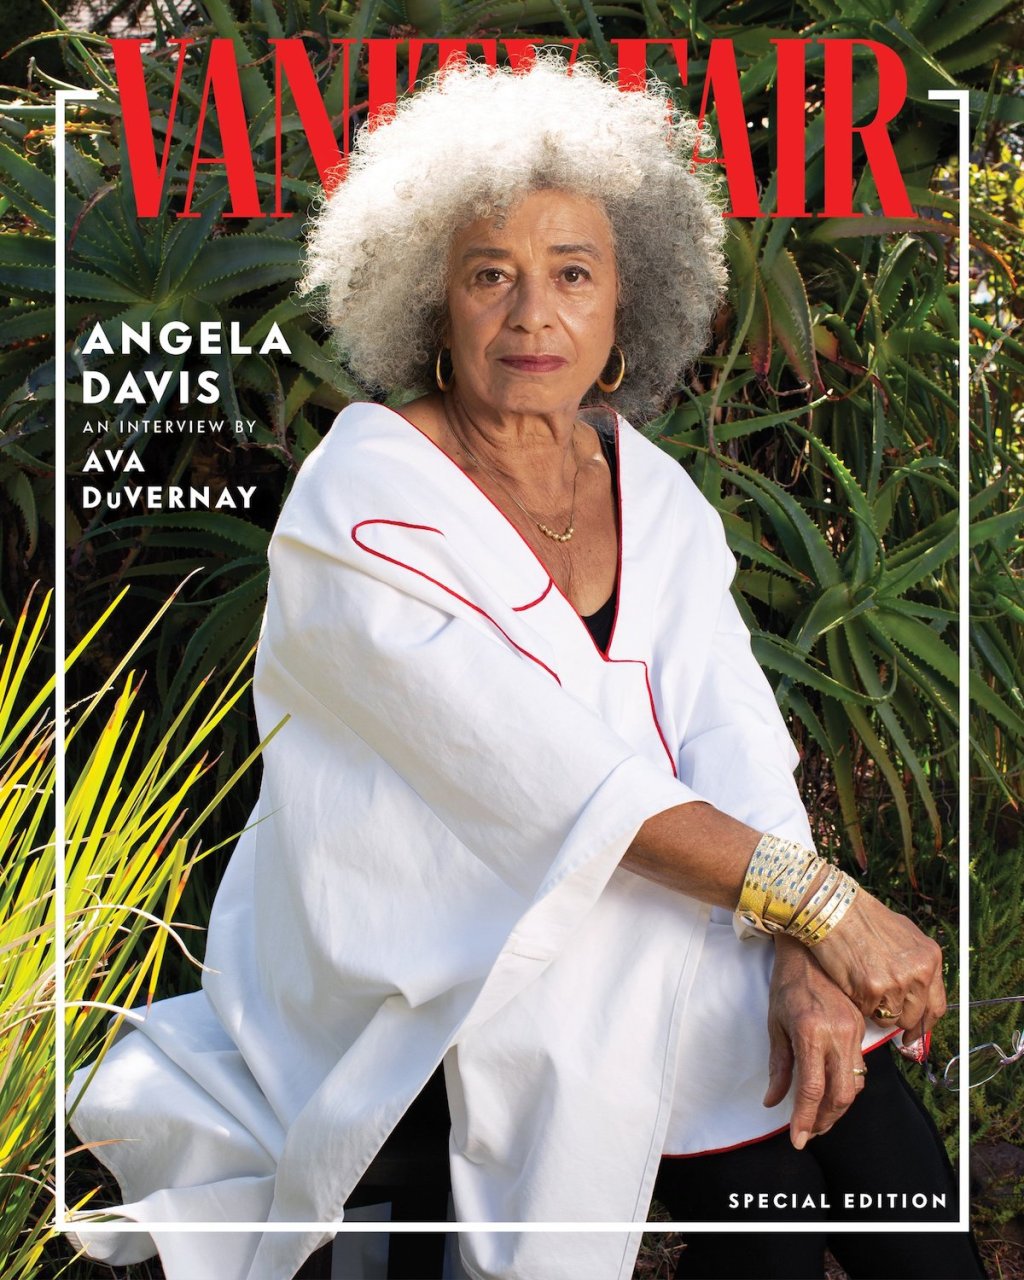 Deana Lawson Photographs Angela Davis for Striking Vanity Fair Cover – ARTnews.com